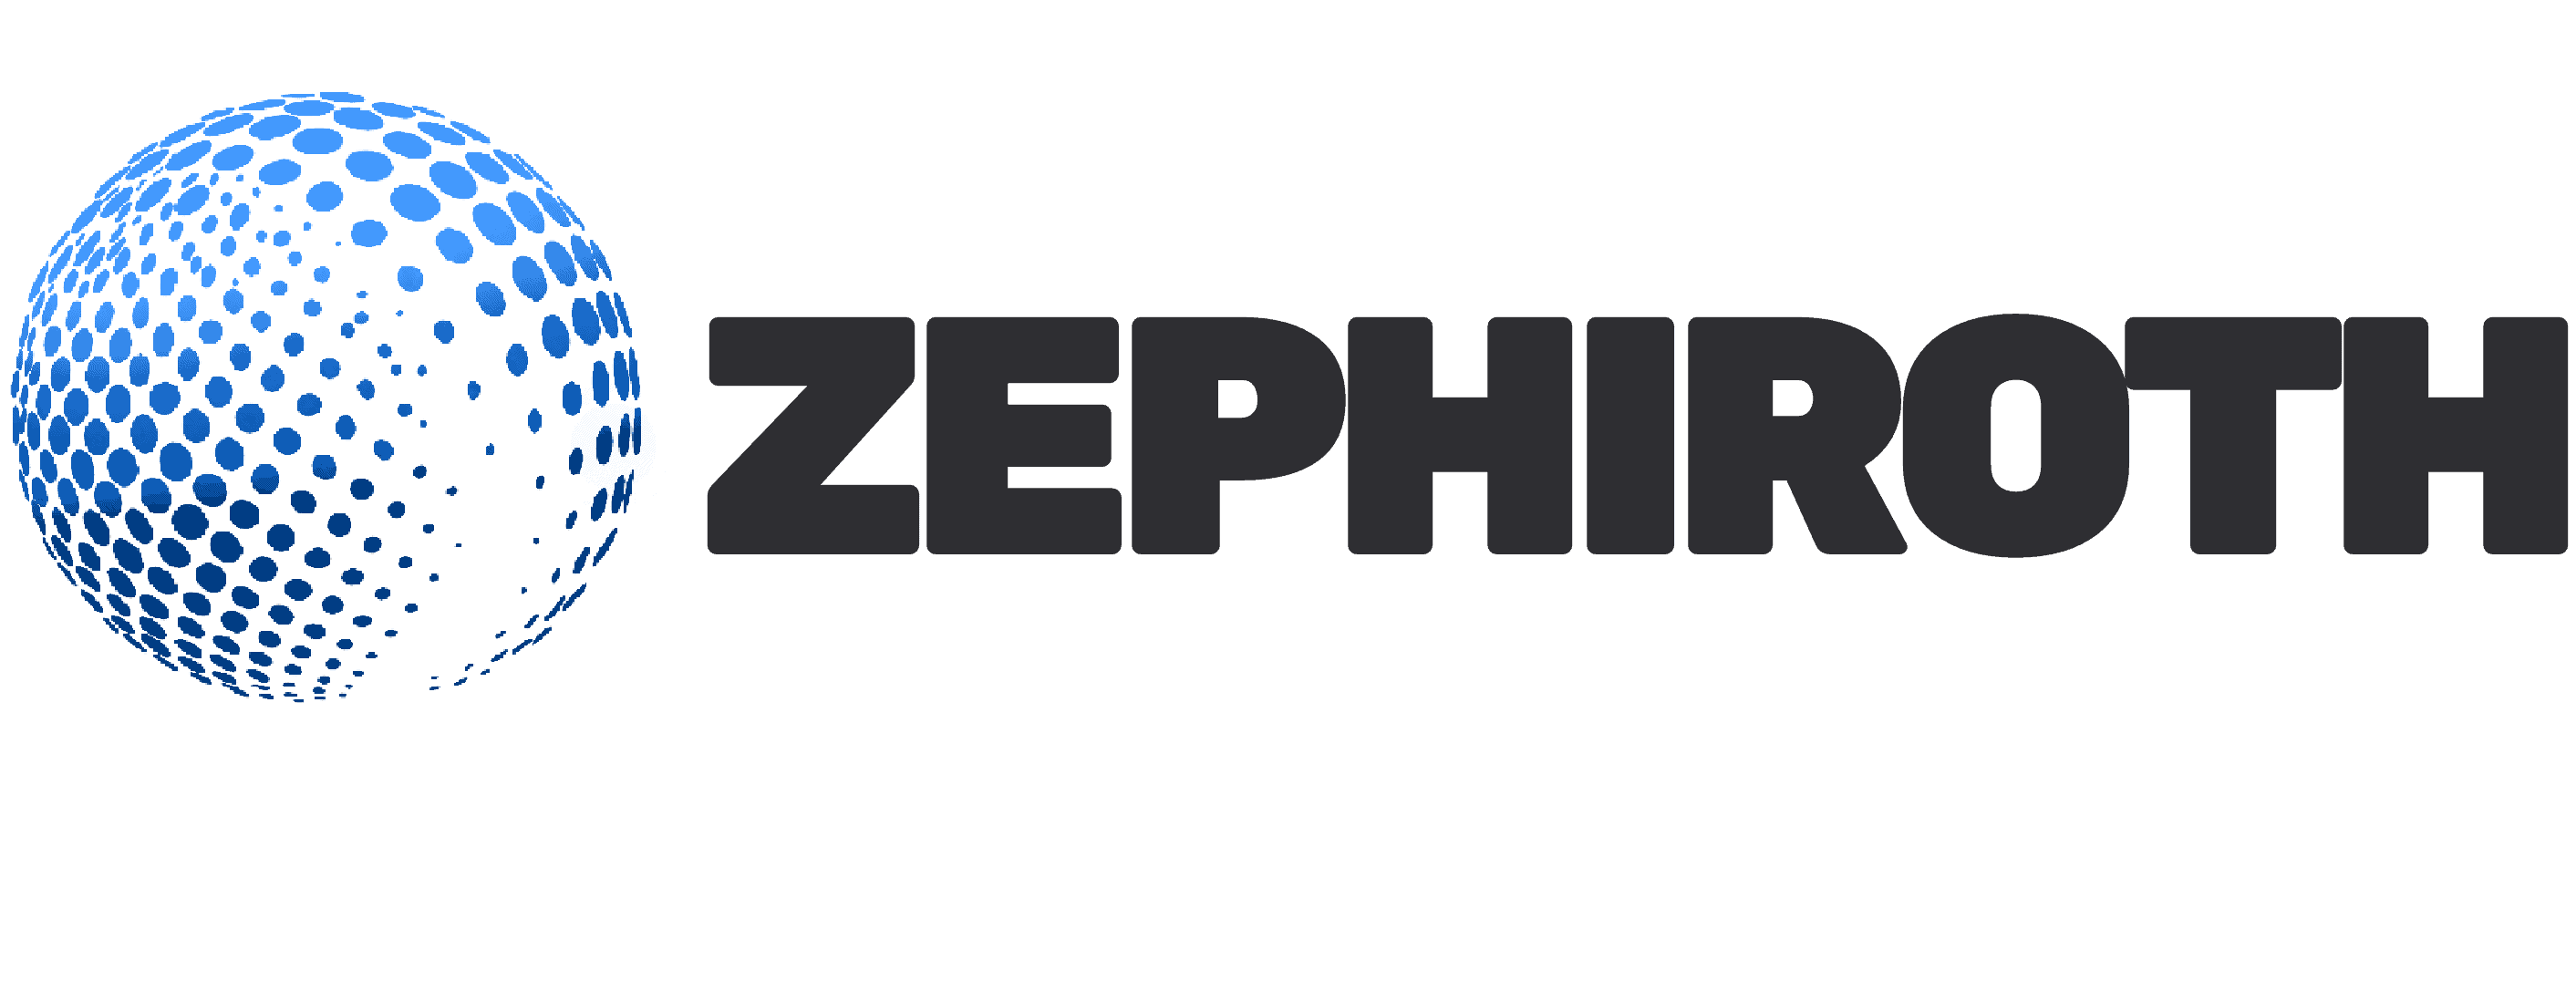 Zephiroth logo